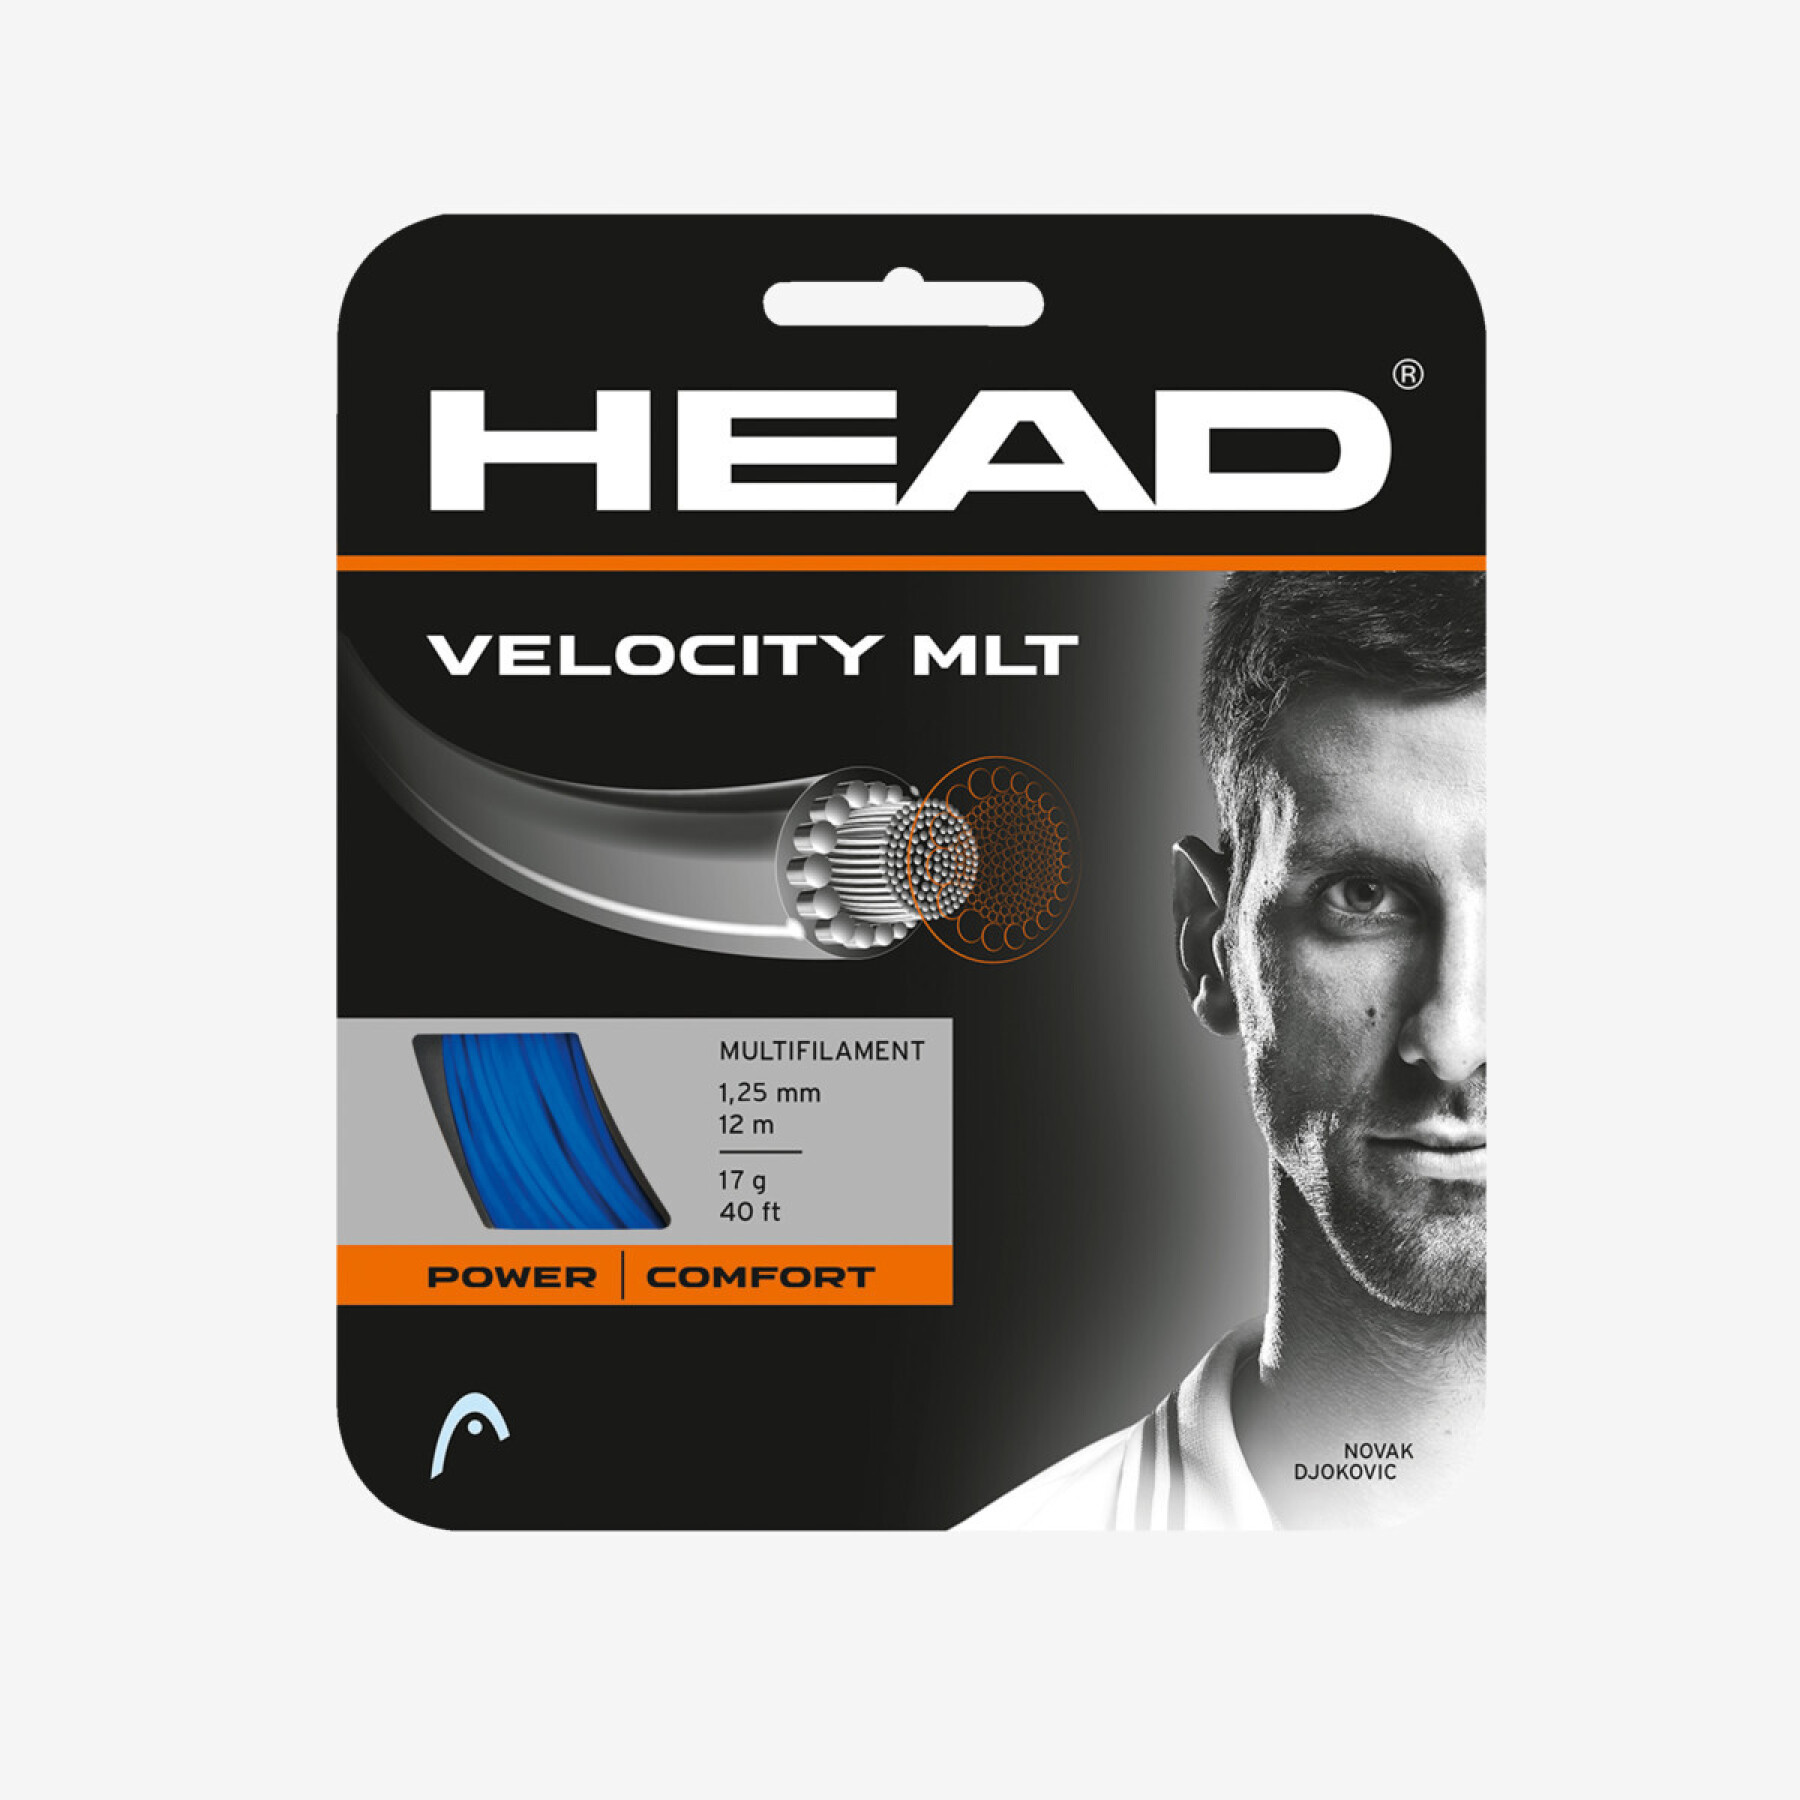 Corde da tennis Head Velocity MLT